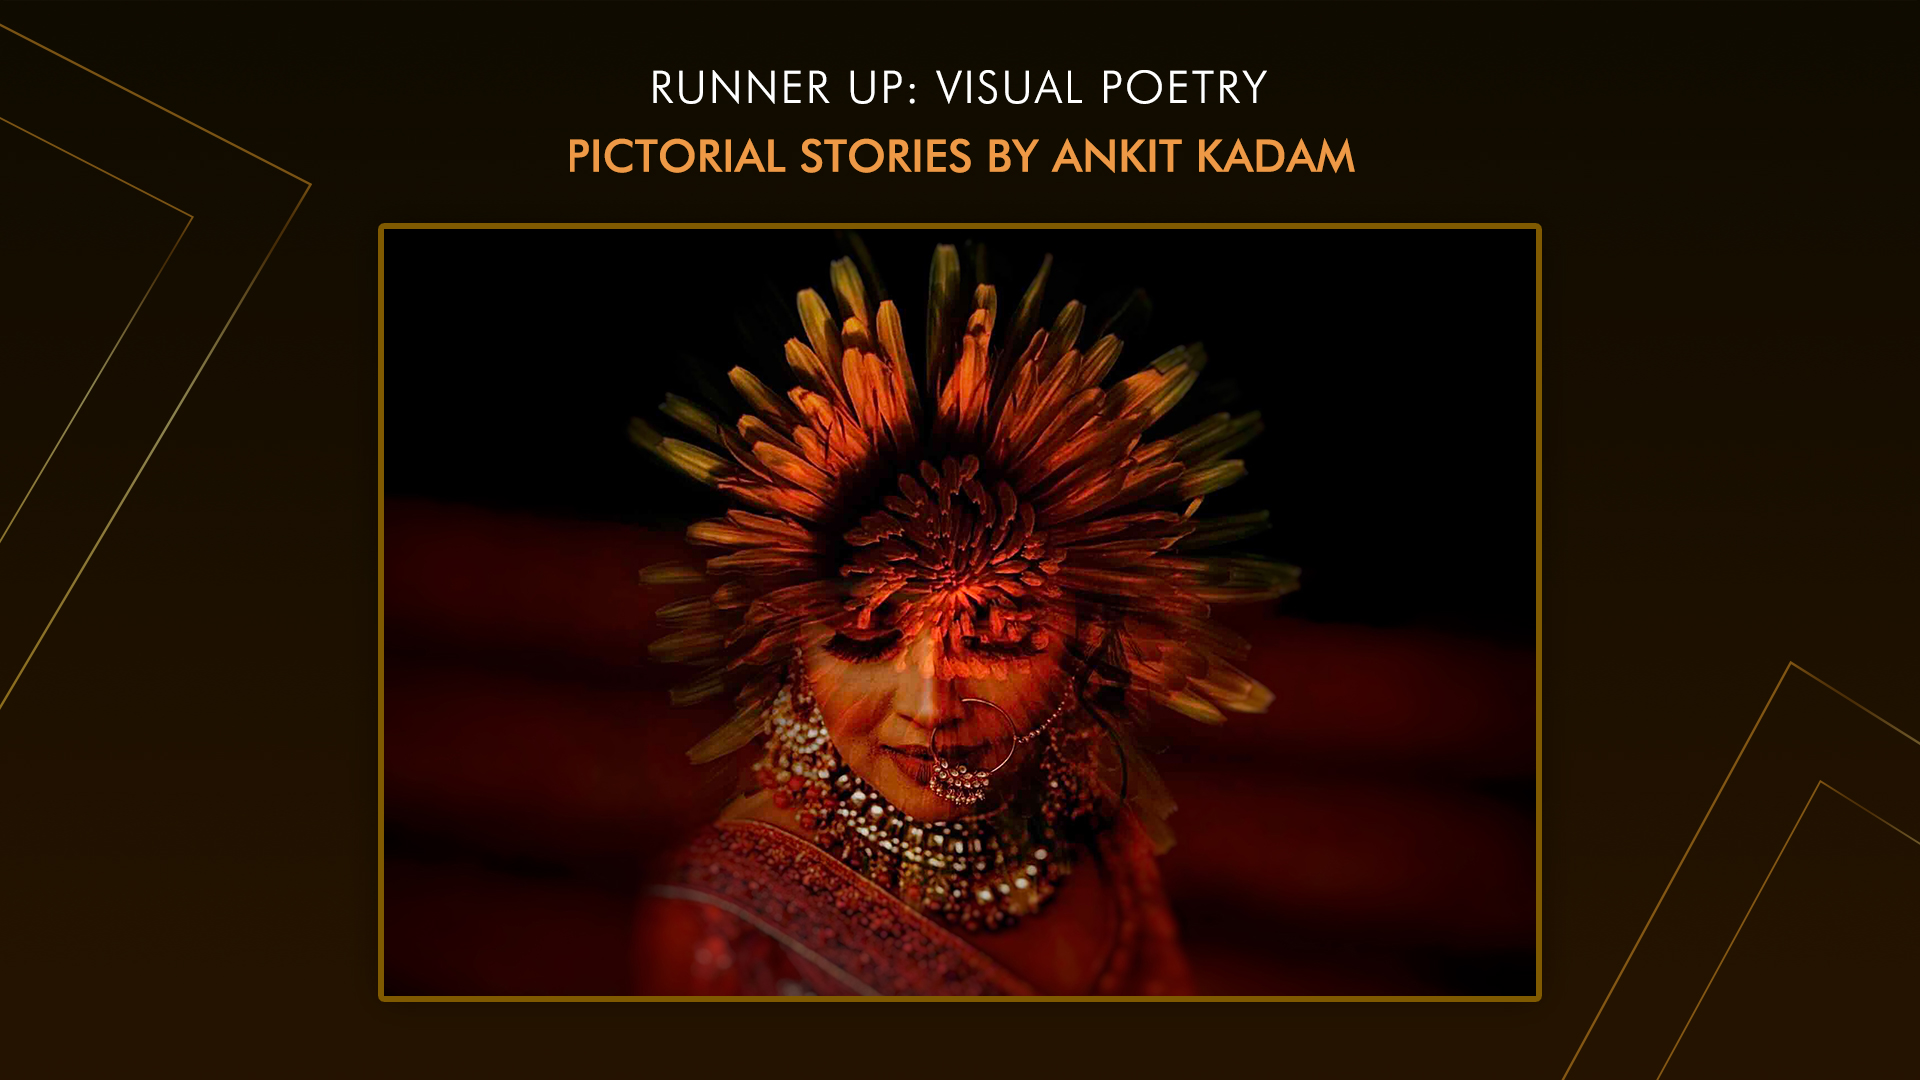 Pictorial Stories by Ankit Kadam